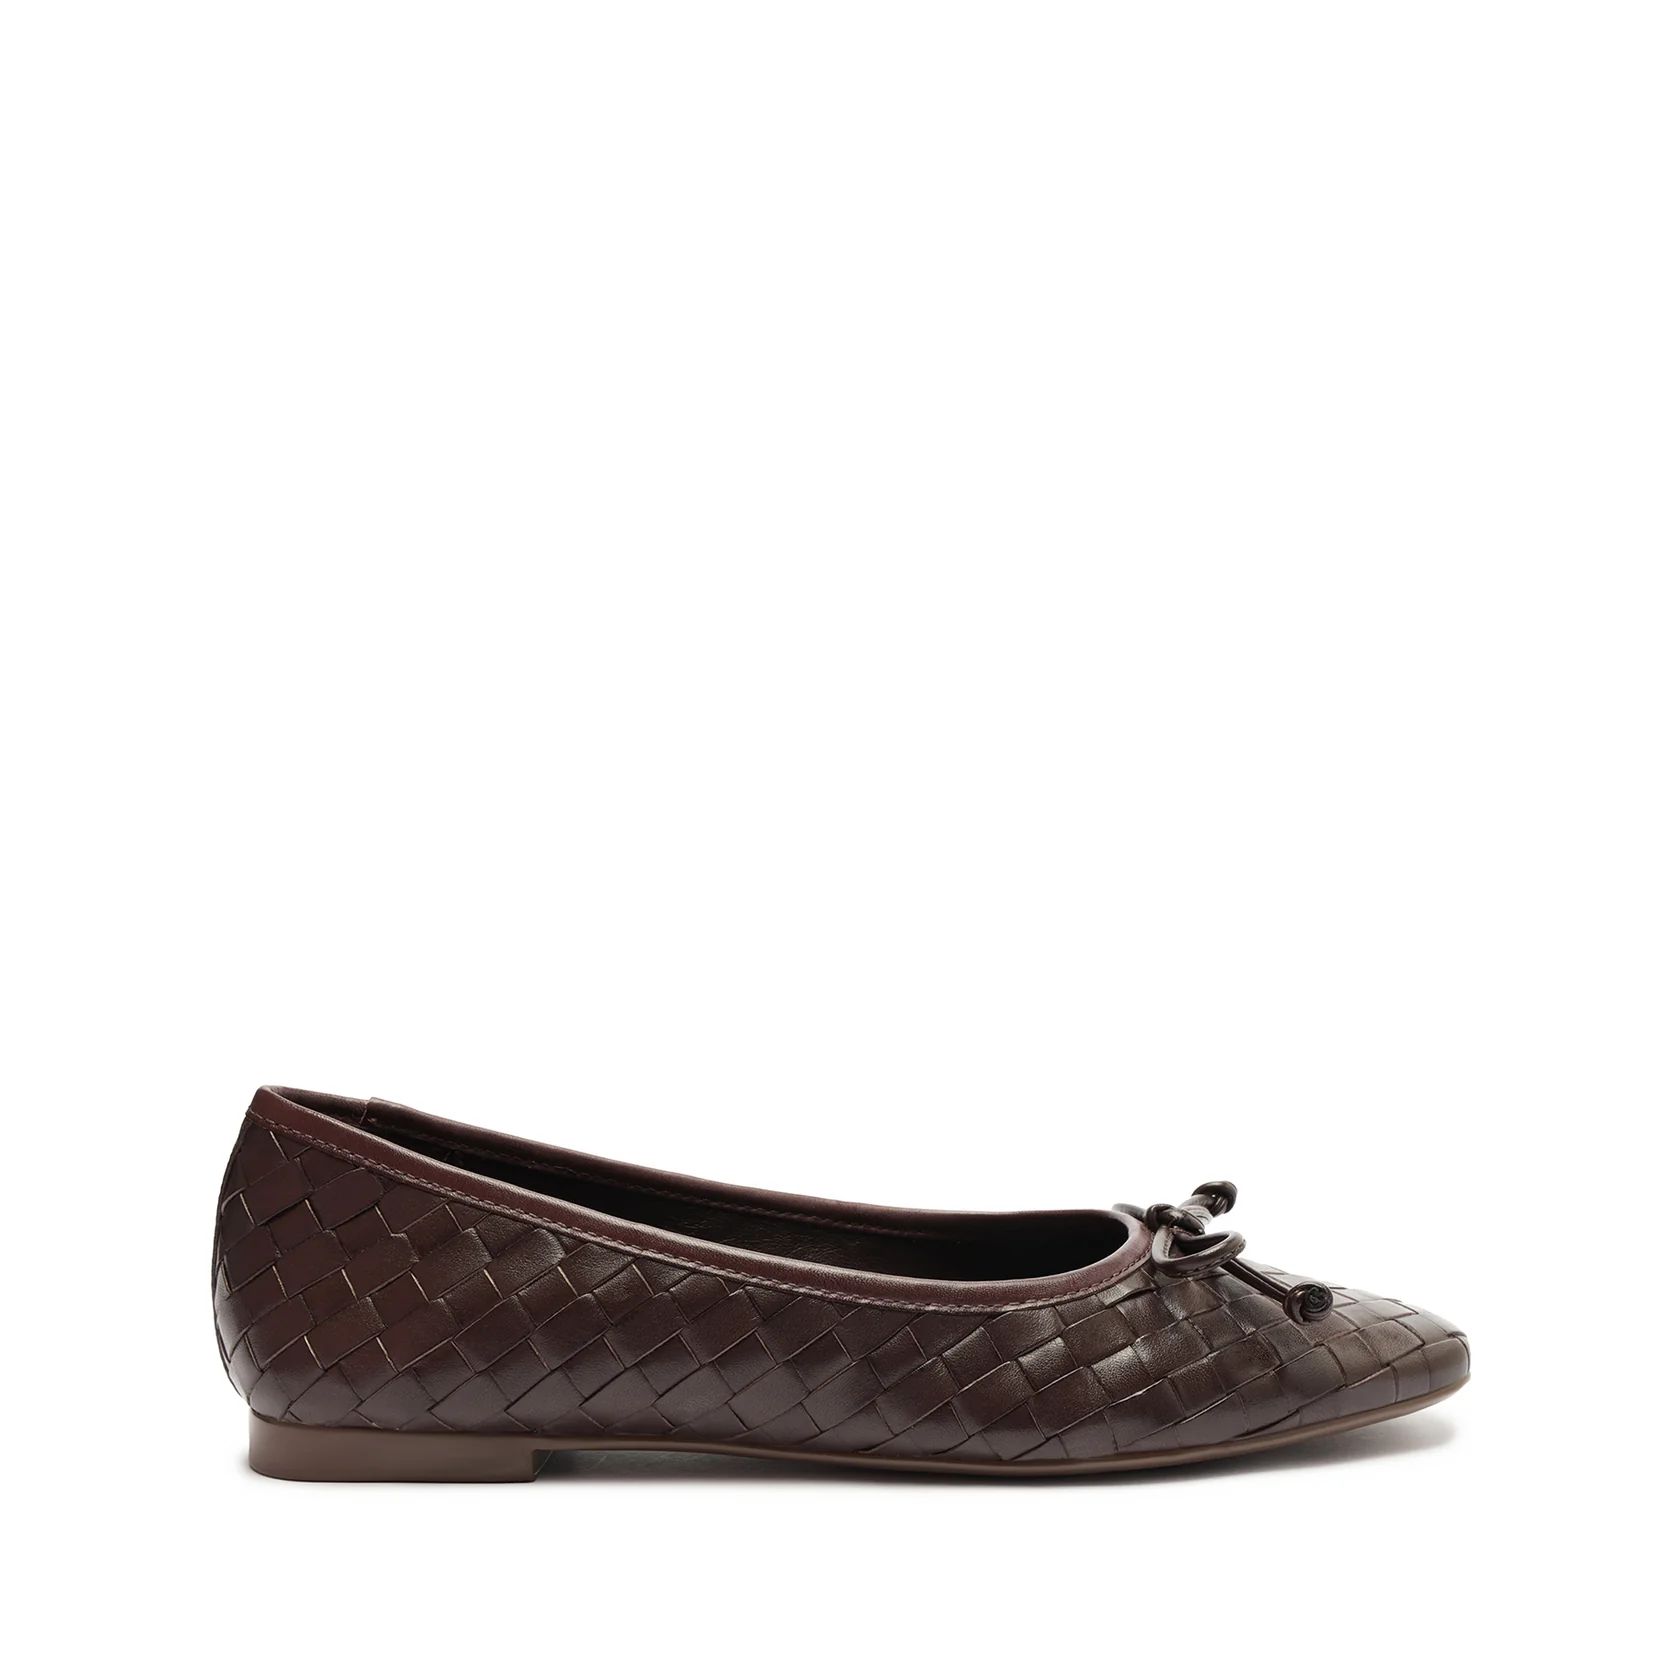 Arissa Woven Leather Flat | Schutz Shoes (US)